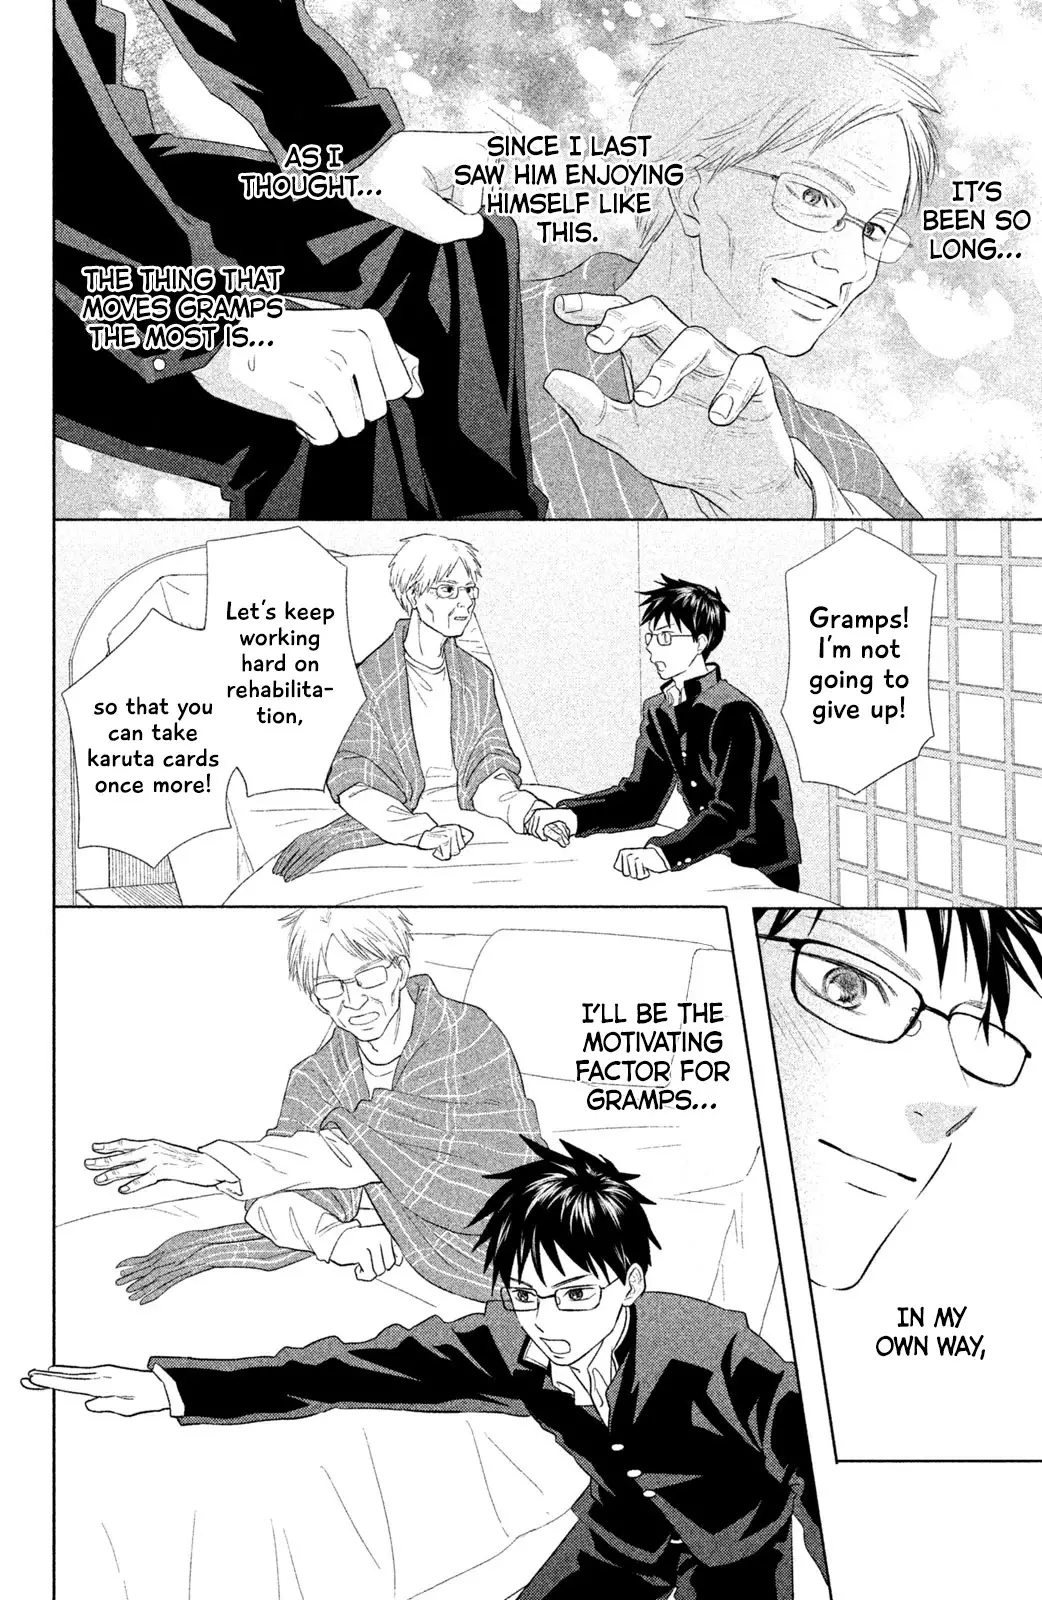 Chihayafuru: Middle School Arc - 9 page 11